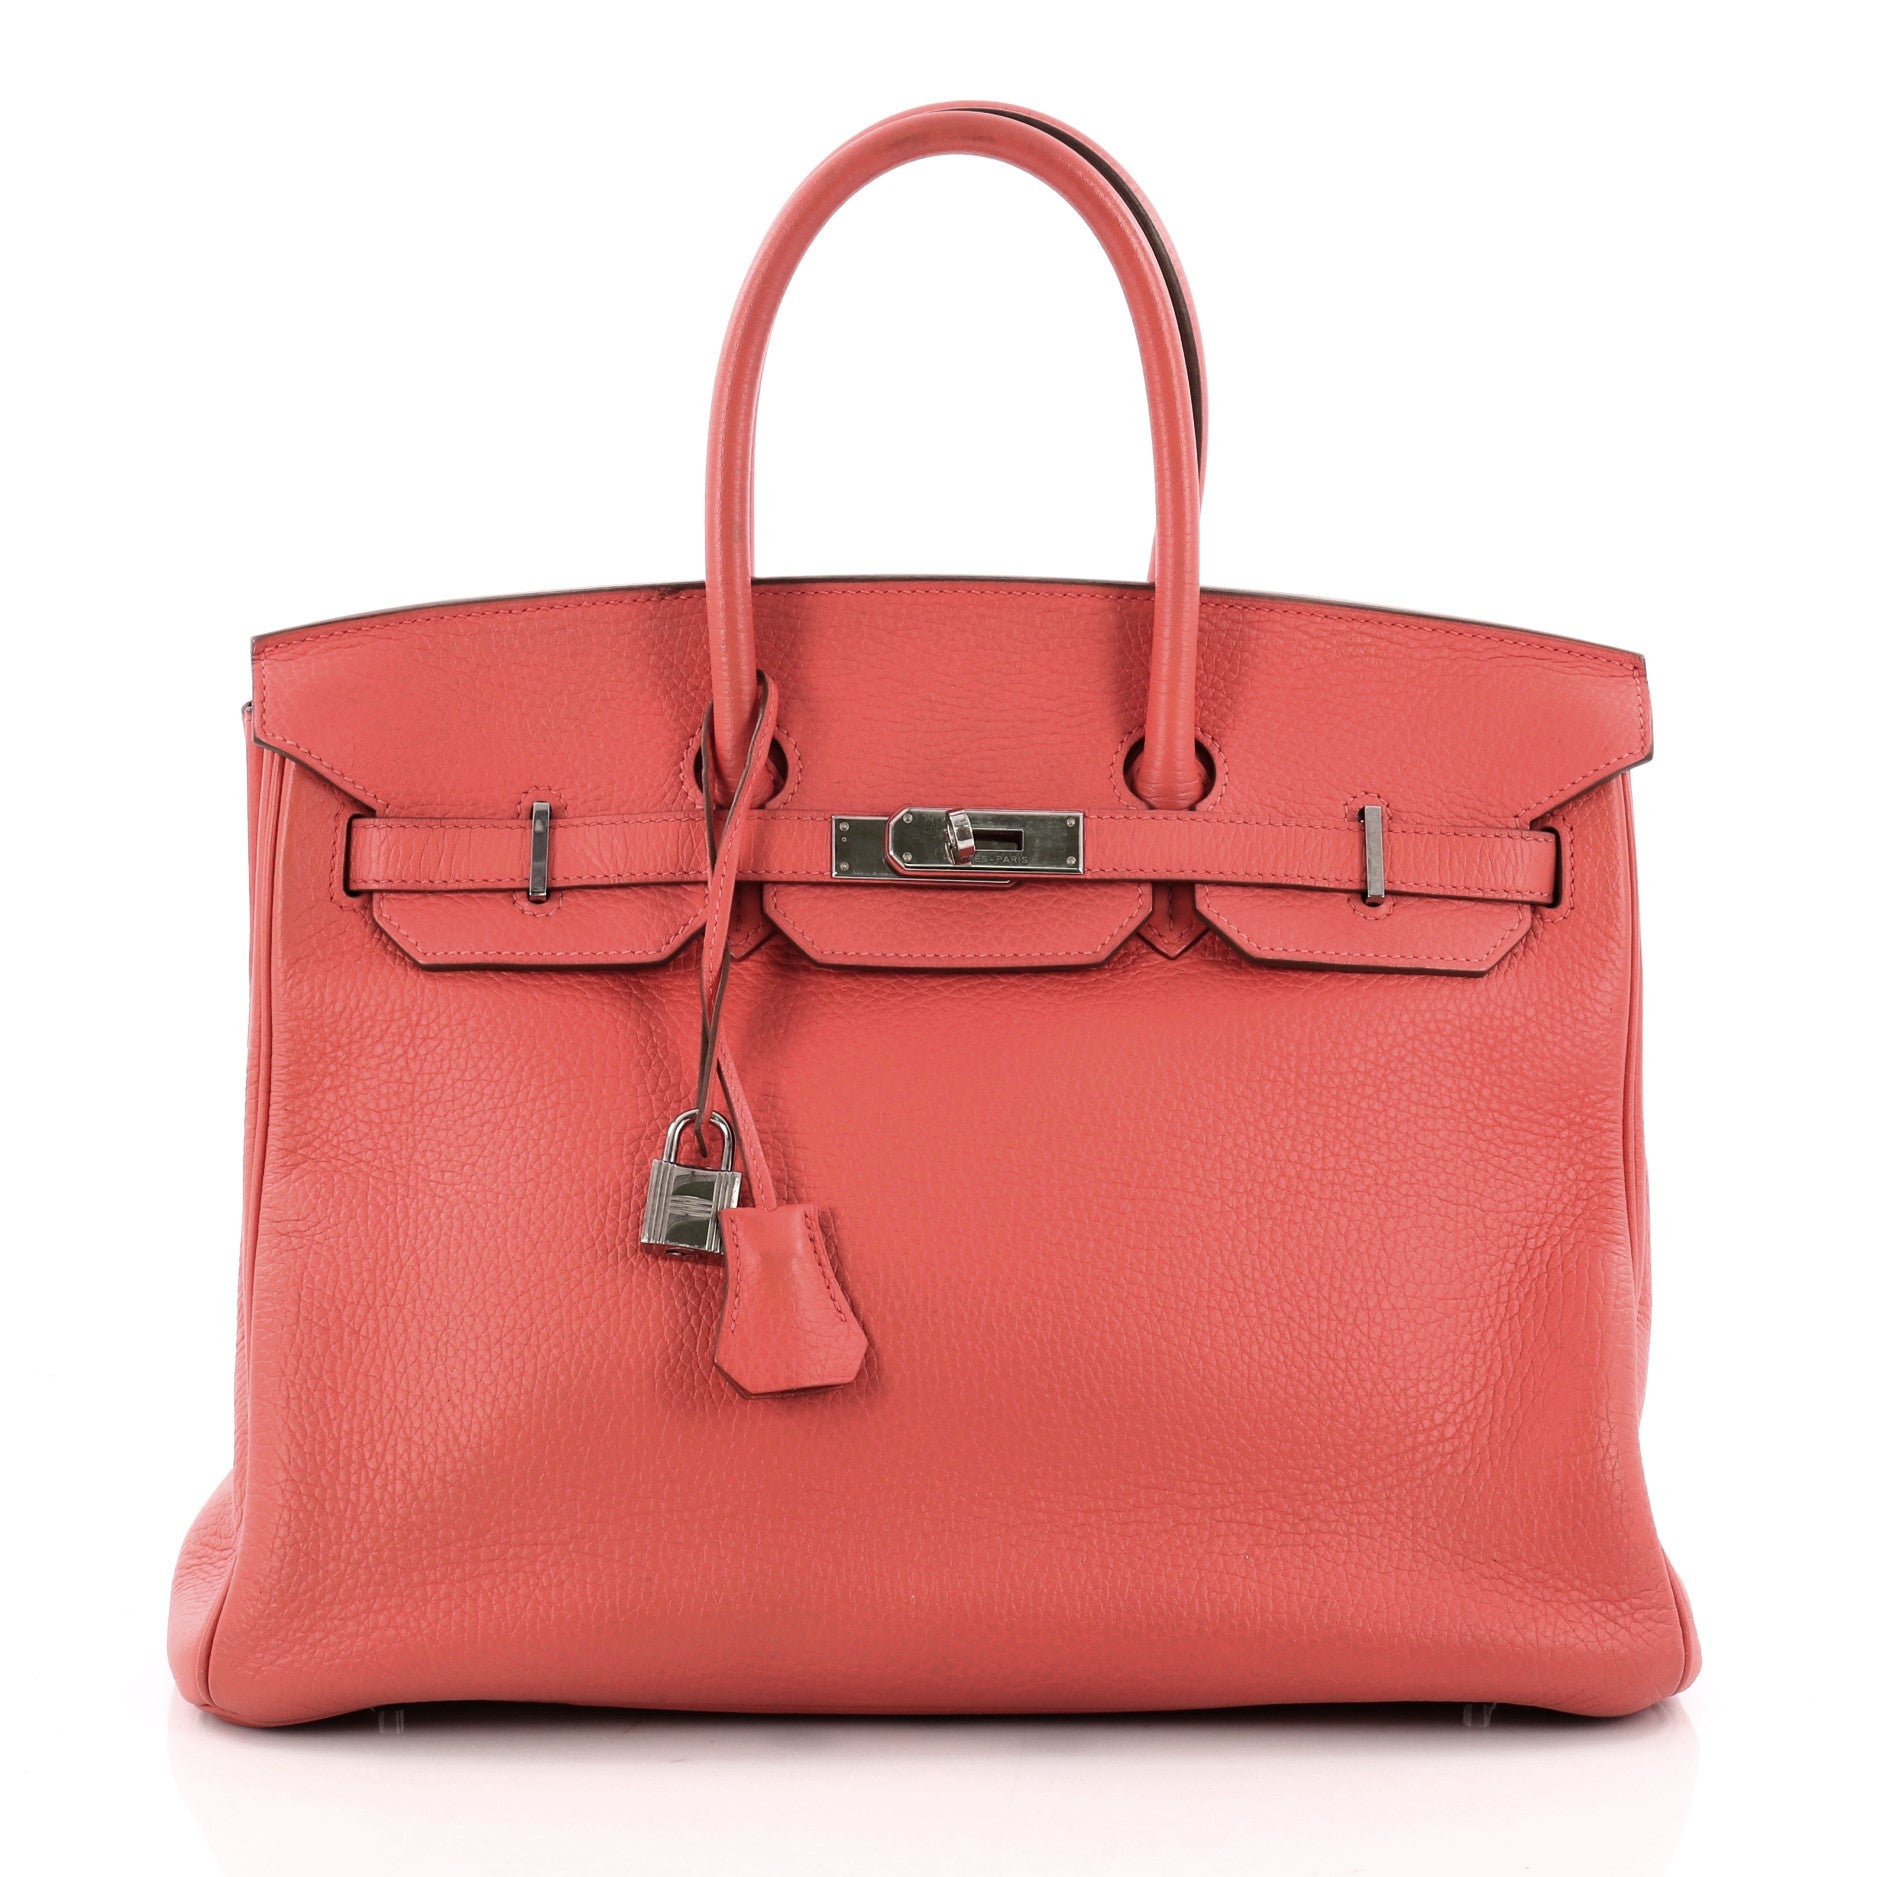 Valentino Garavani Mini Vsling Grainy Calfskin Handbag - Cyclamen Pink